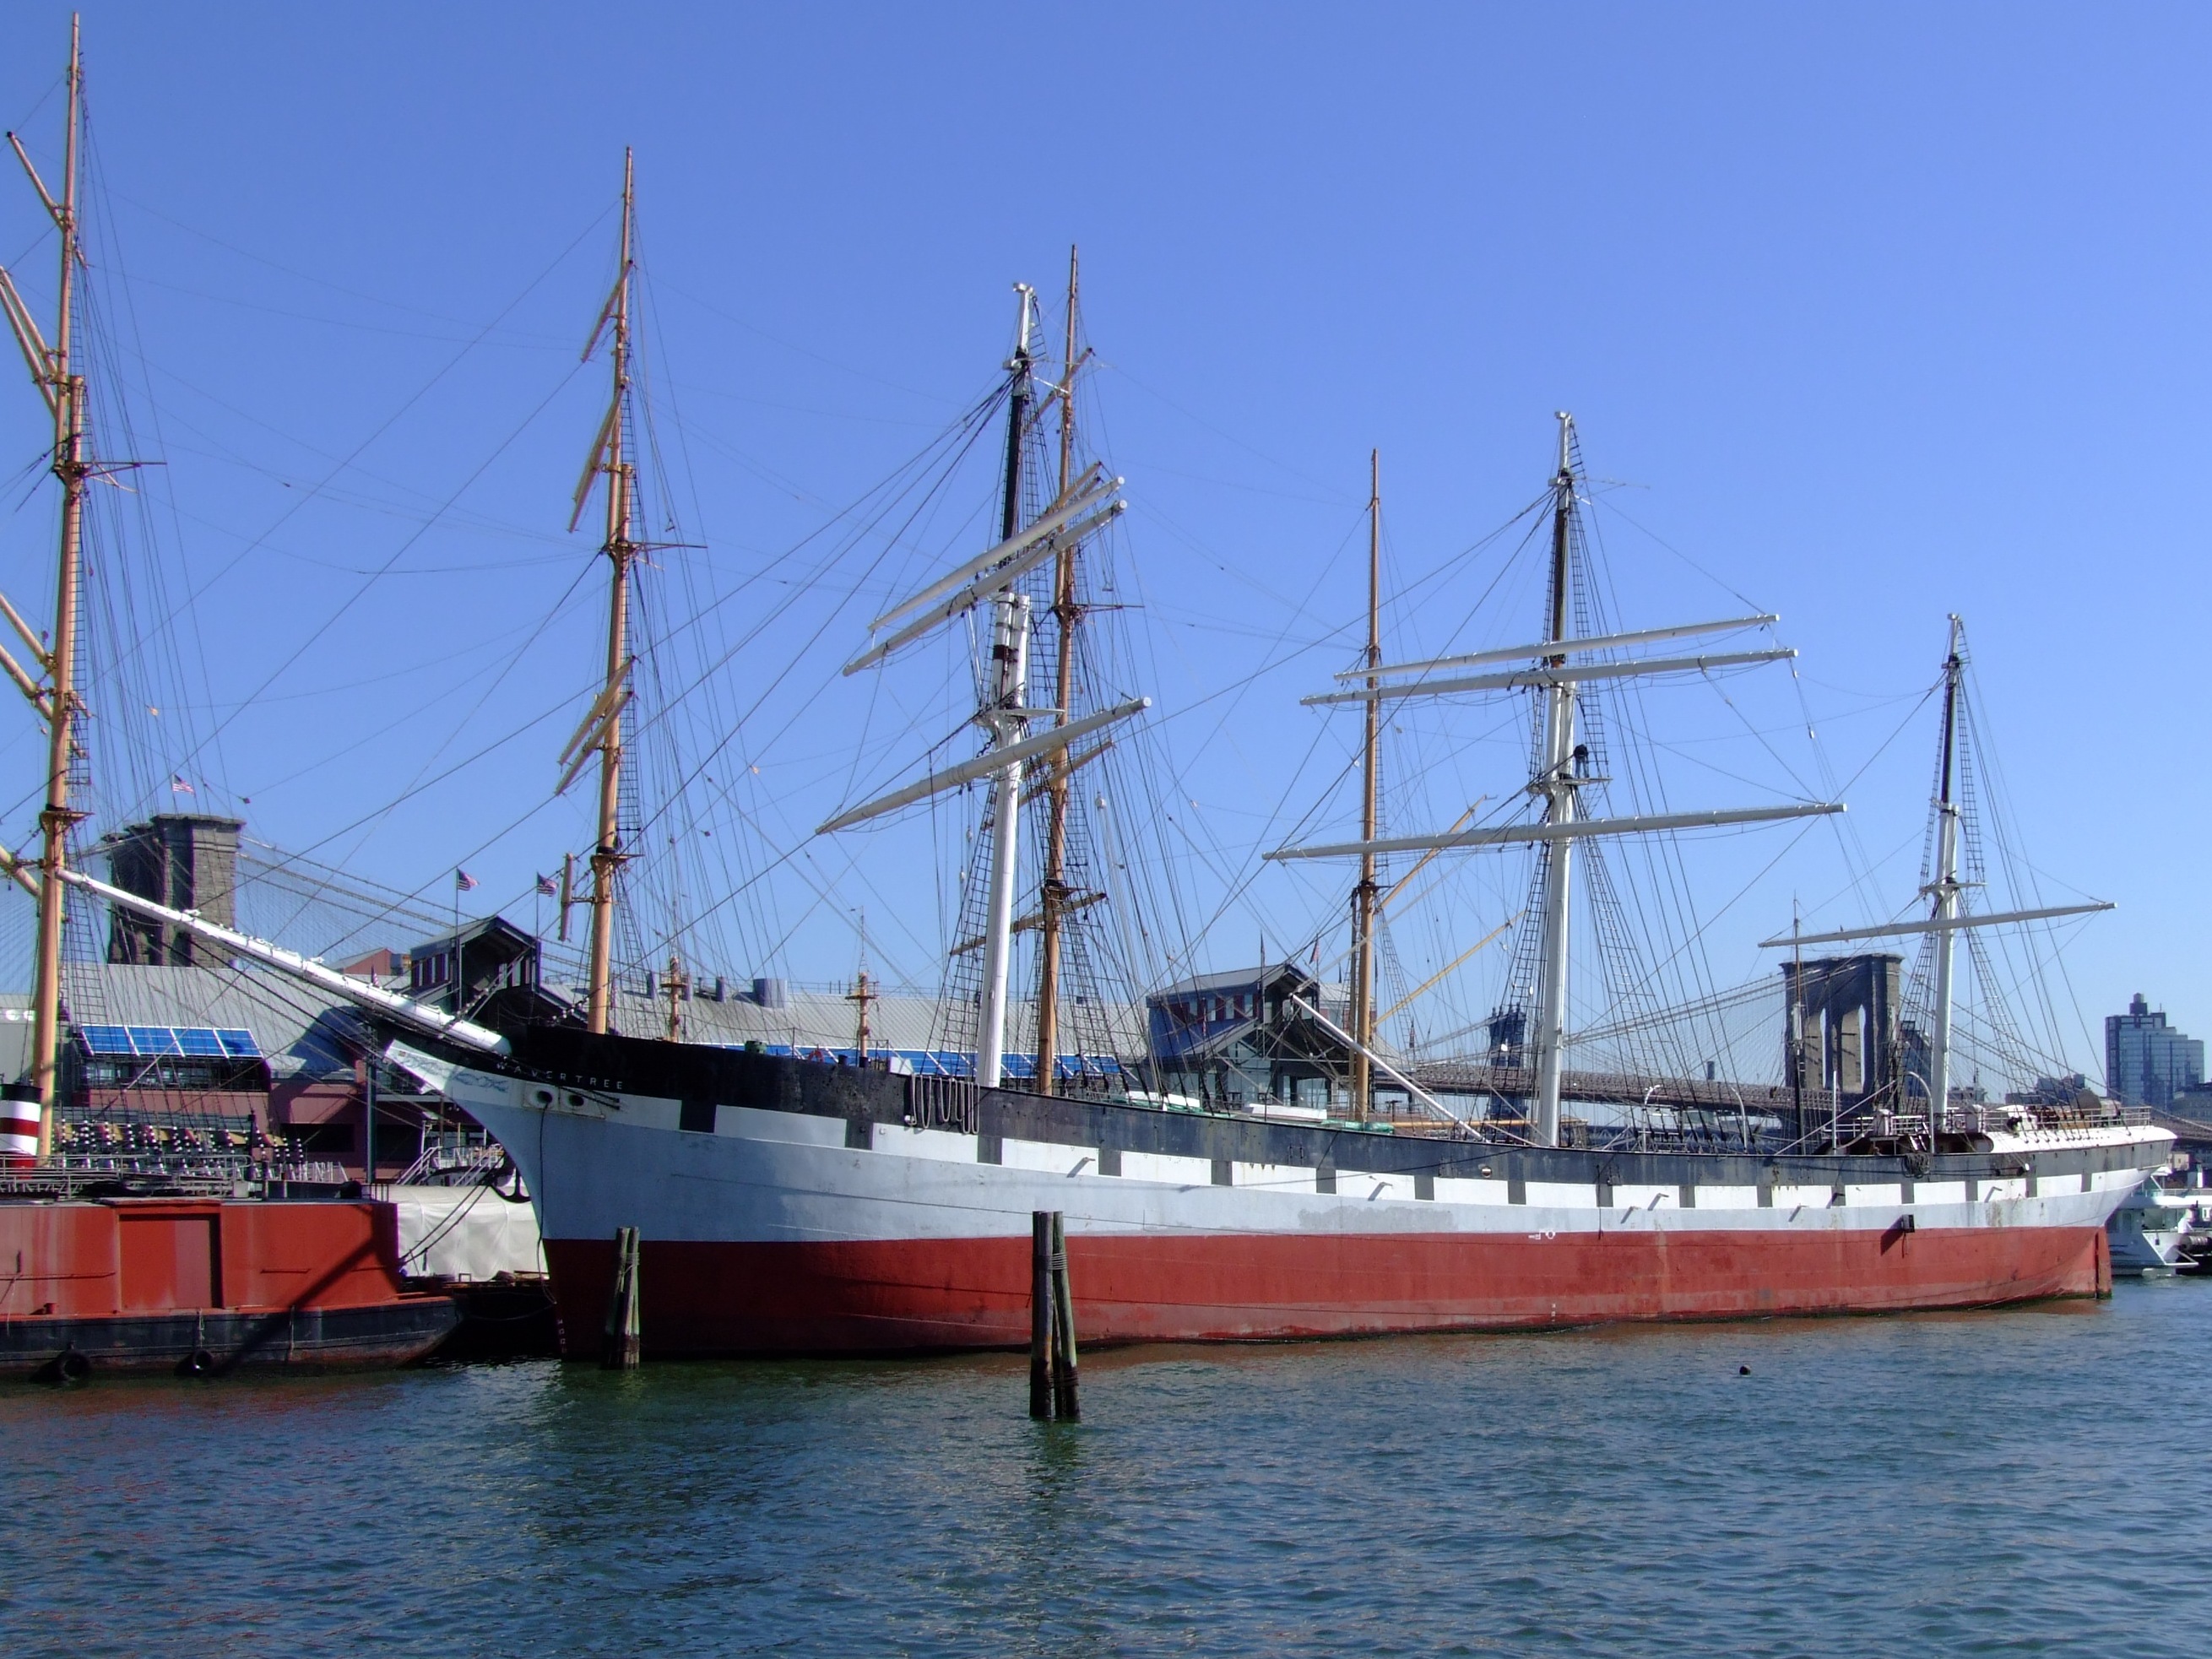 The Wavertree docked at New York City's South Street Seaport. (Photo Wikimedia Commons)